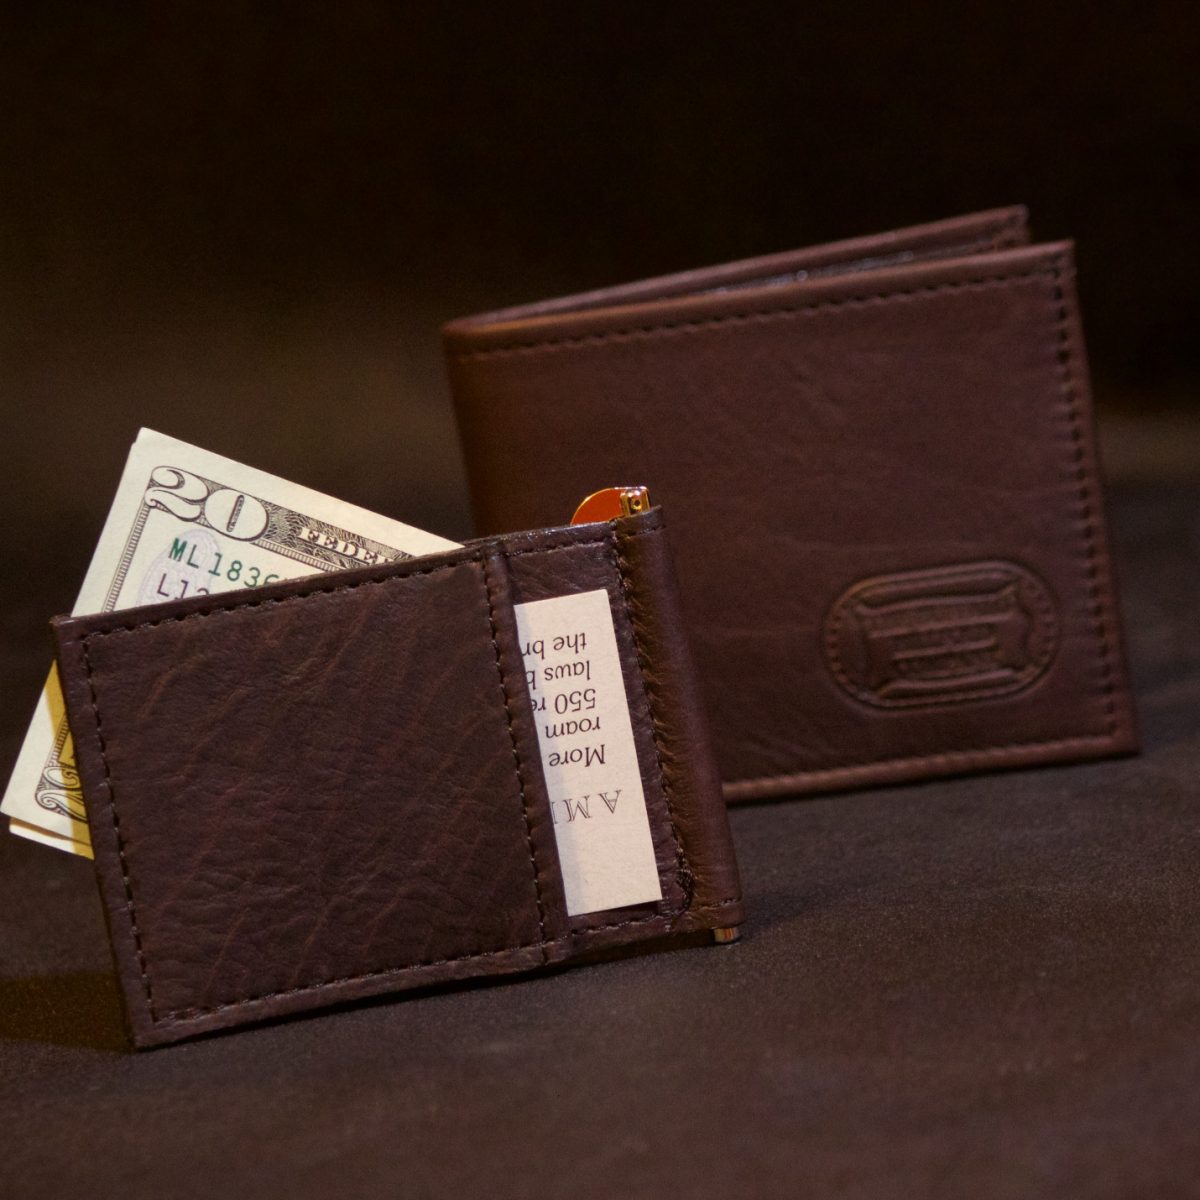 Brown Colour Bi-Fold Italian Leather Money Clip Card Holder/Slim